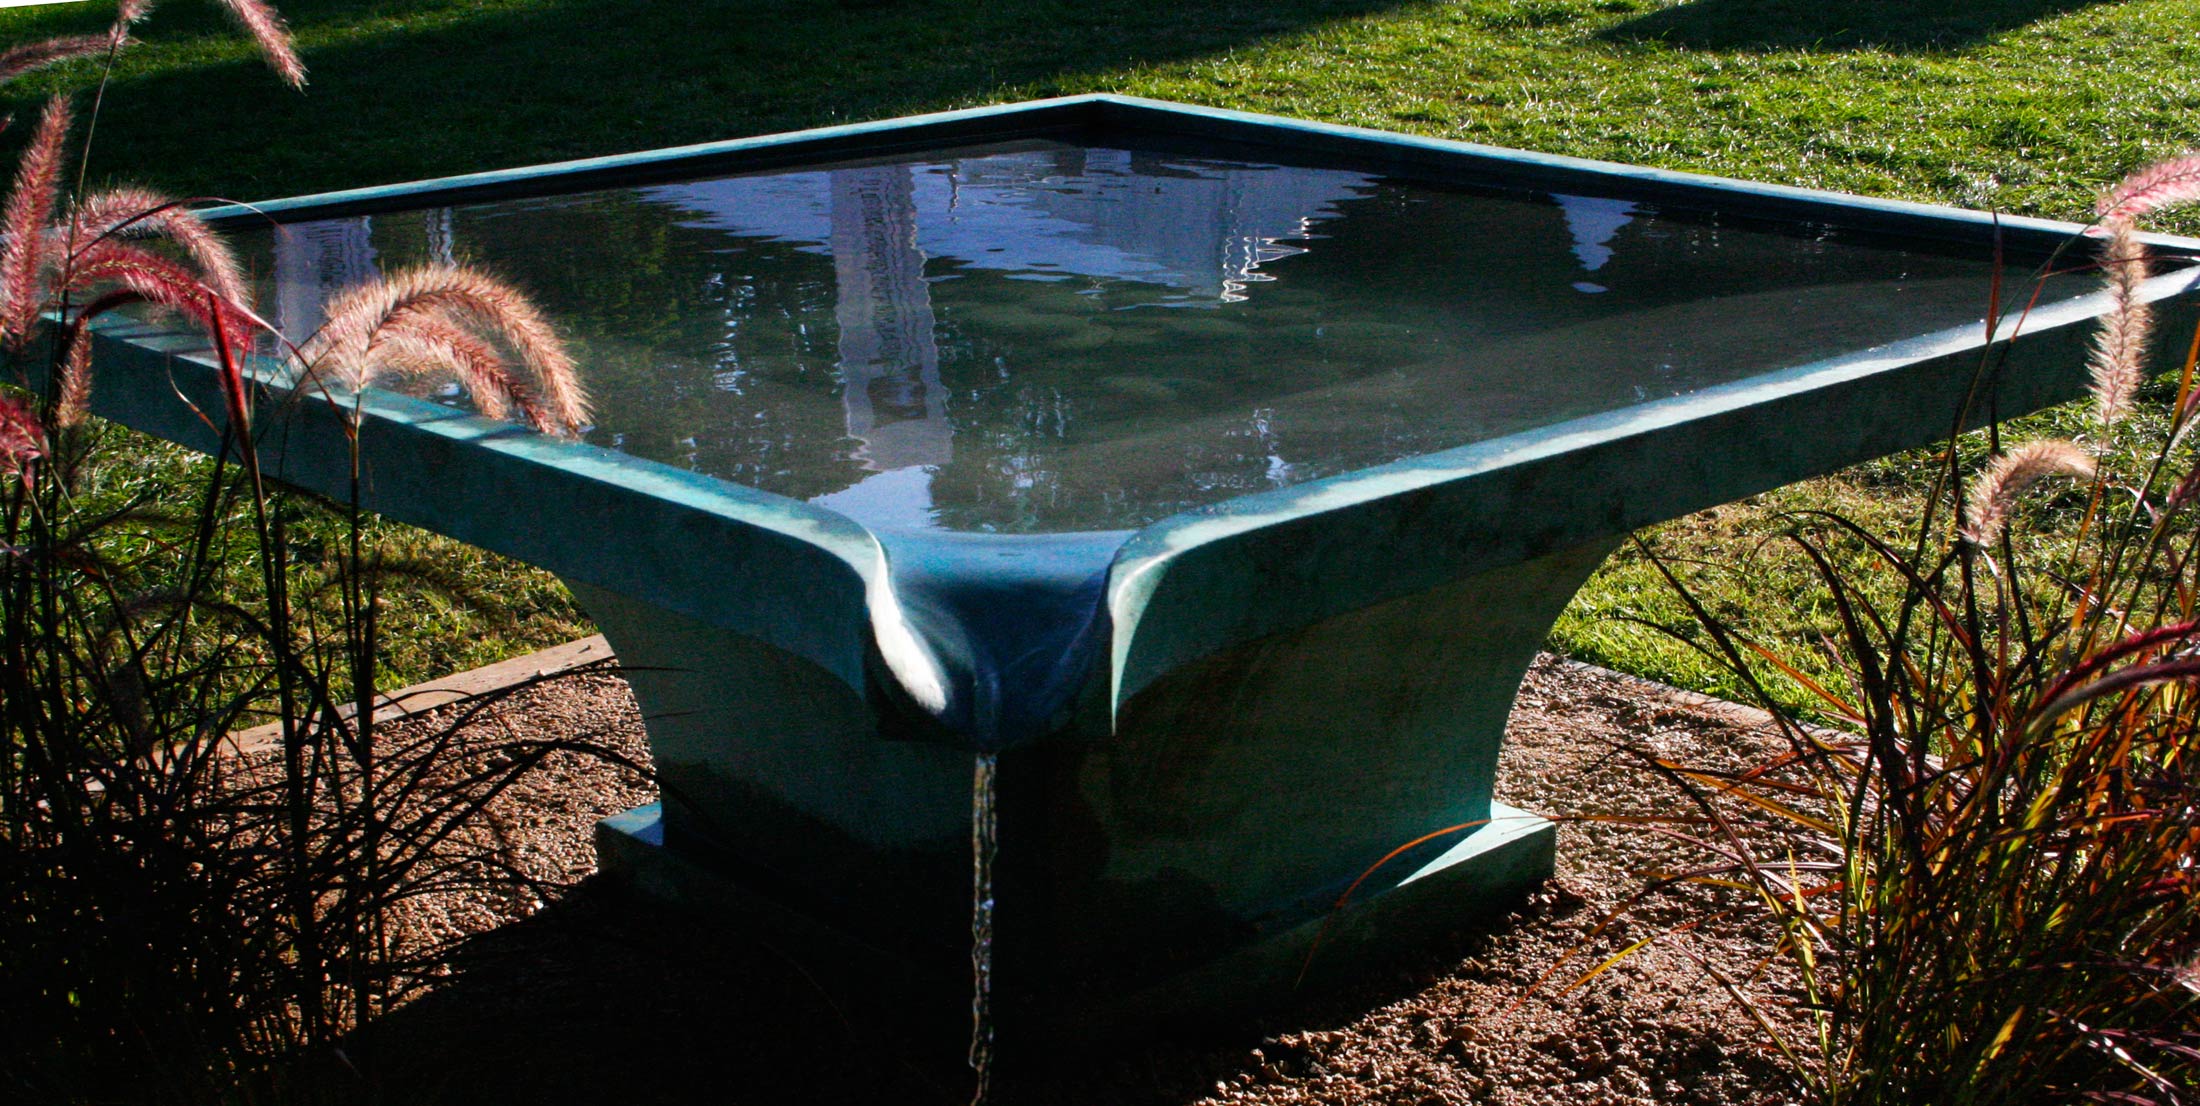 Esk tableau water feature - Peter Eustance Symphonic Gardens